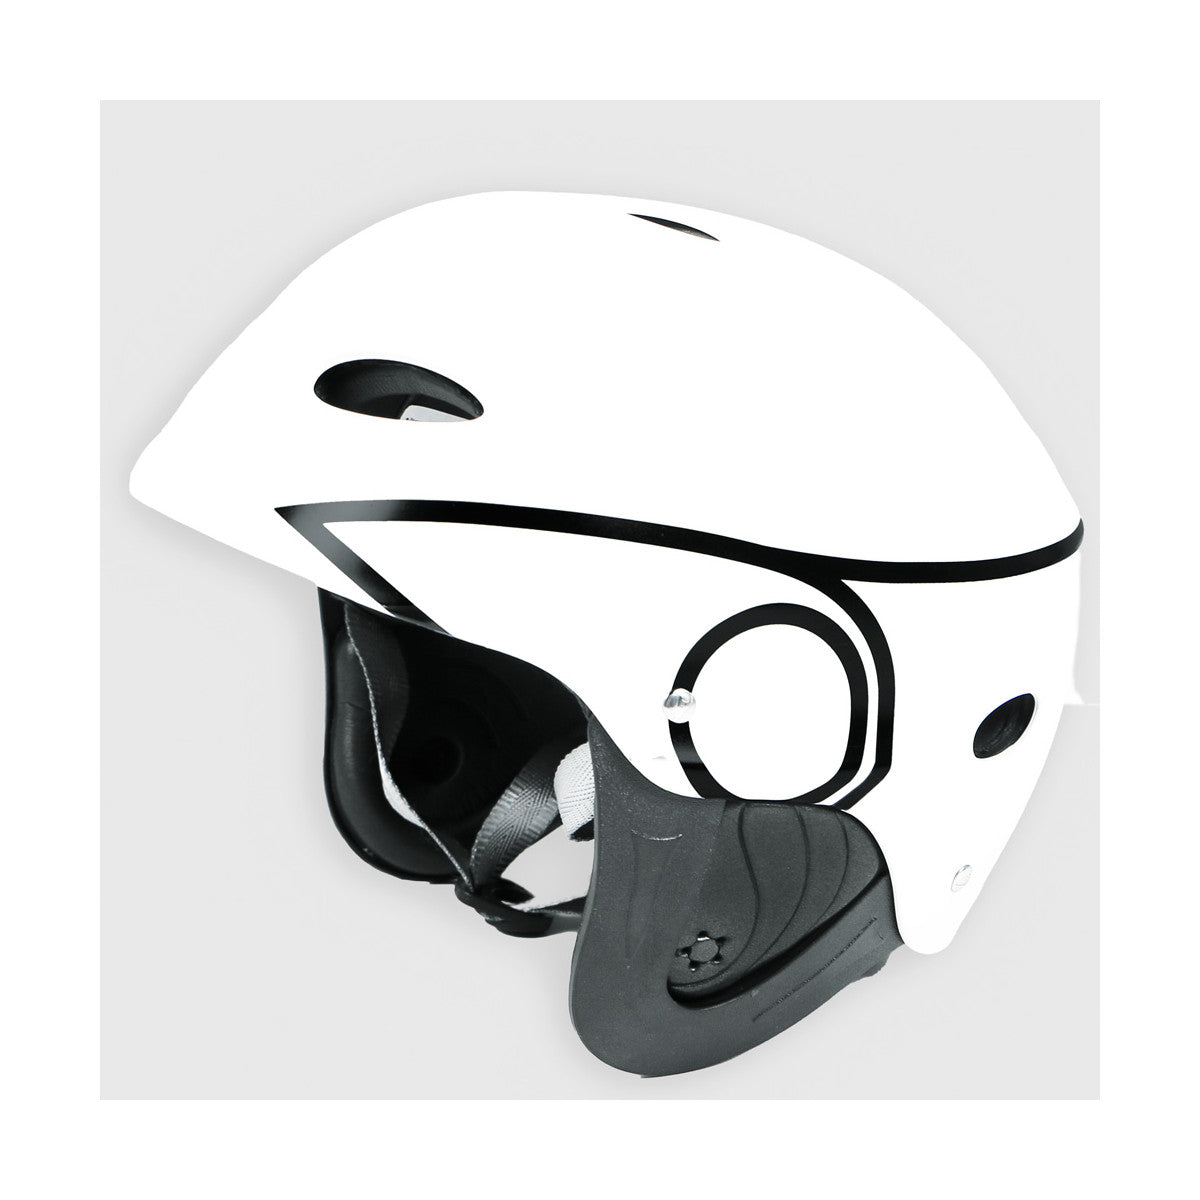 Sooruz Water Helmet - RIDE